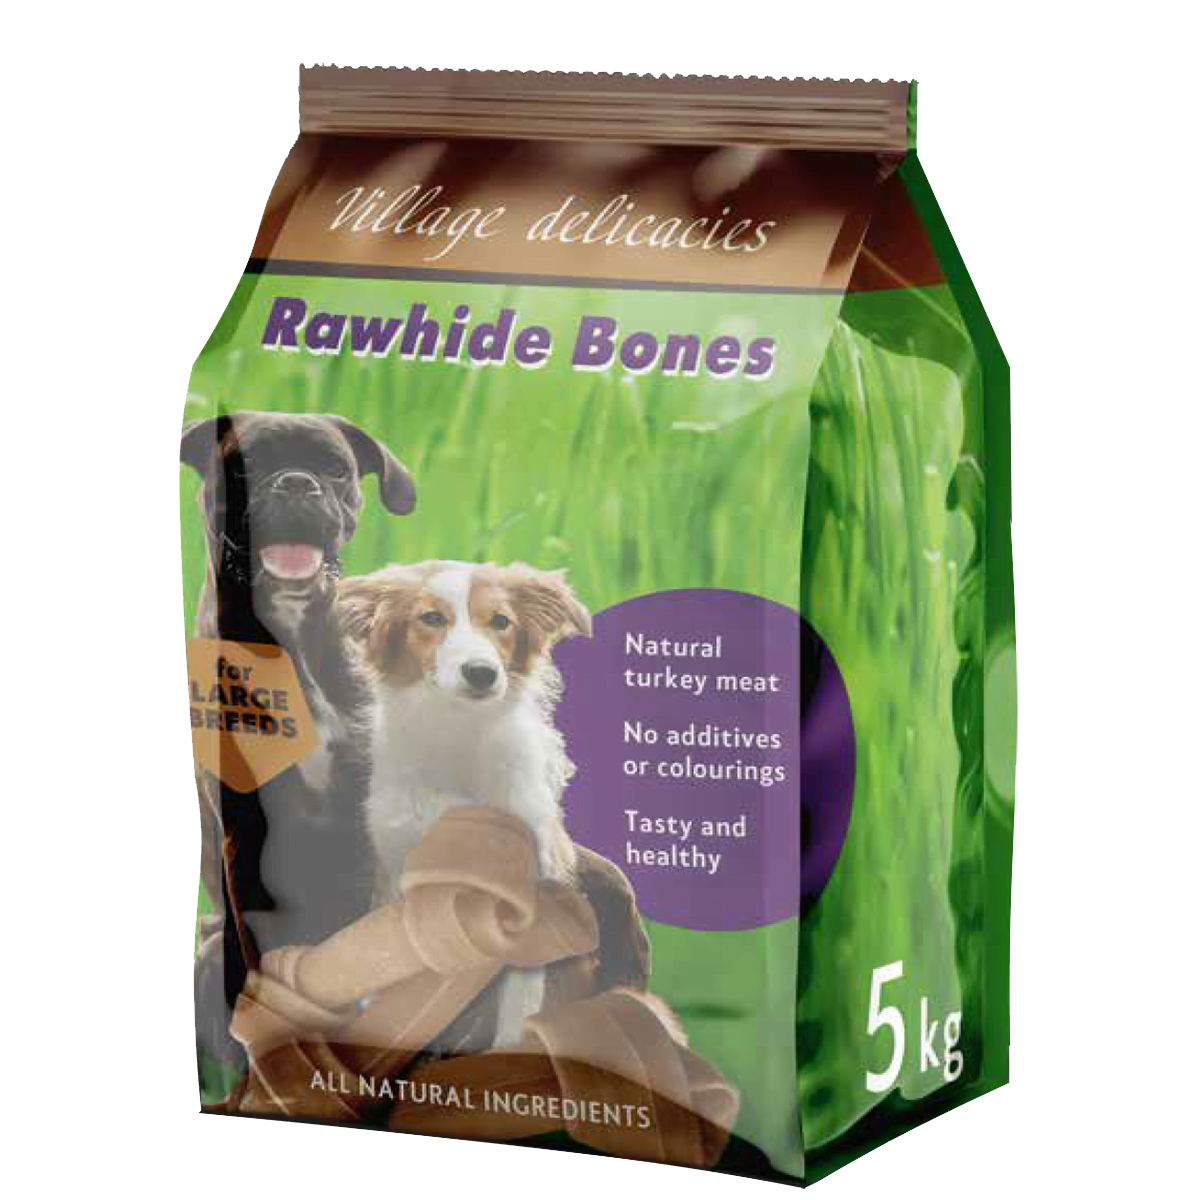 Rawhide Bones Dog Treats Box Bottom Pouch Printed Glossy Bag Dental Treat Packaging Chew Hold 5 kg